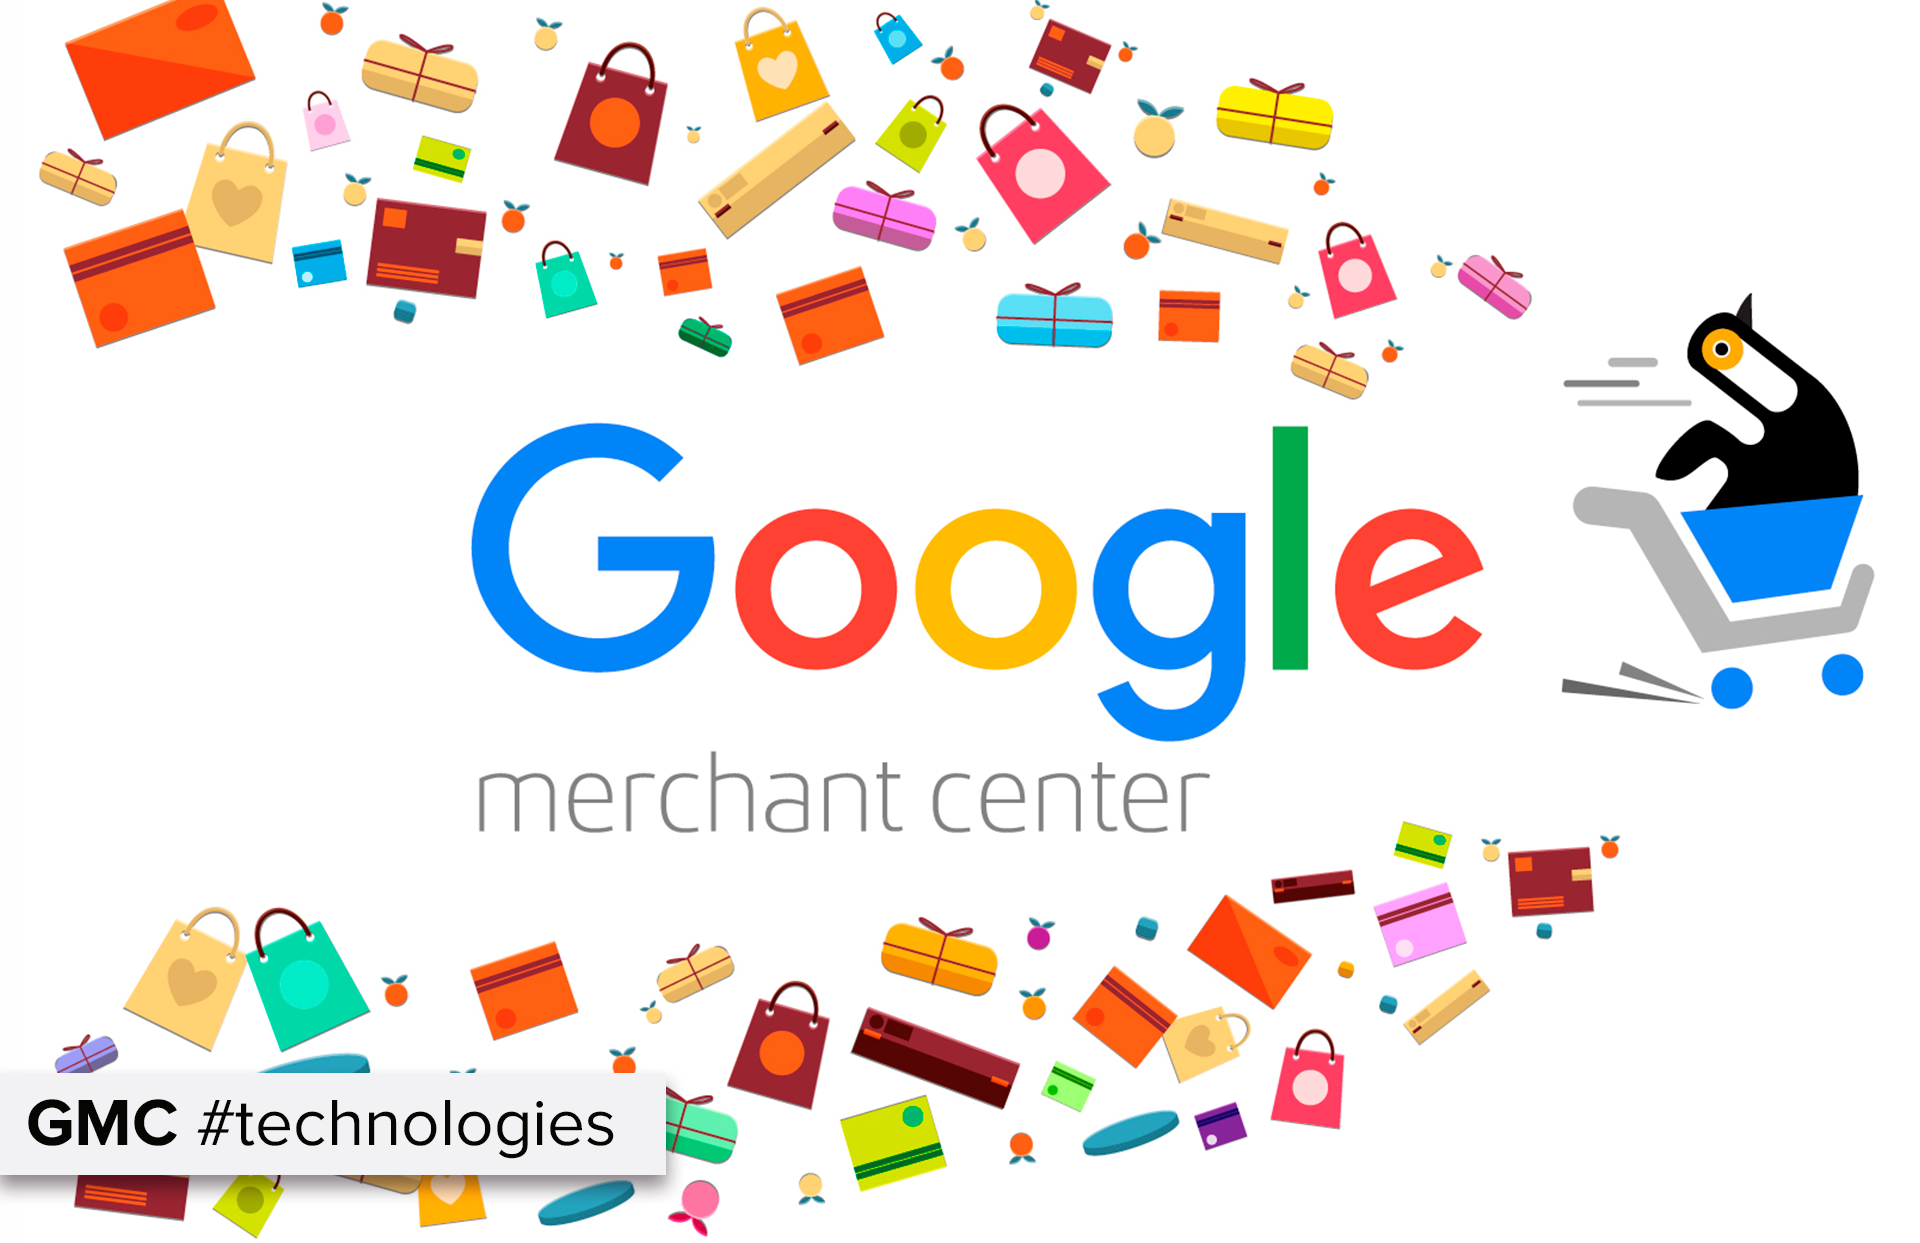 Емблема Google merchant center.